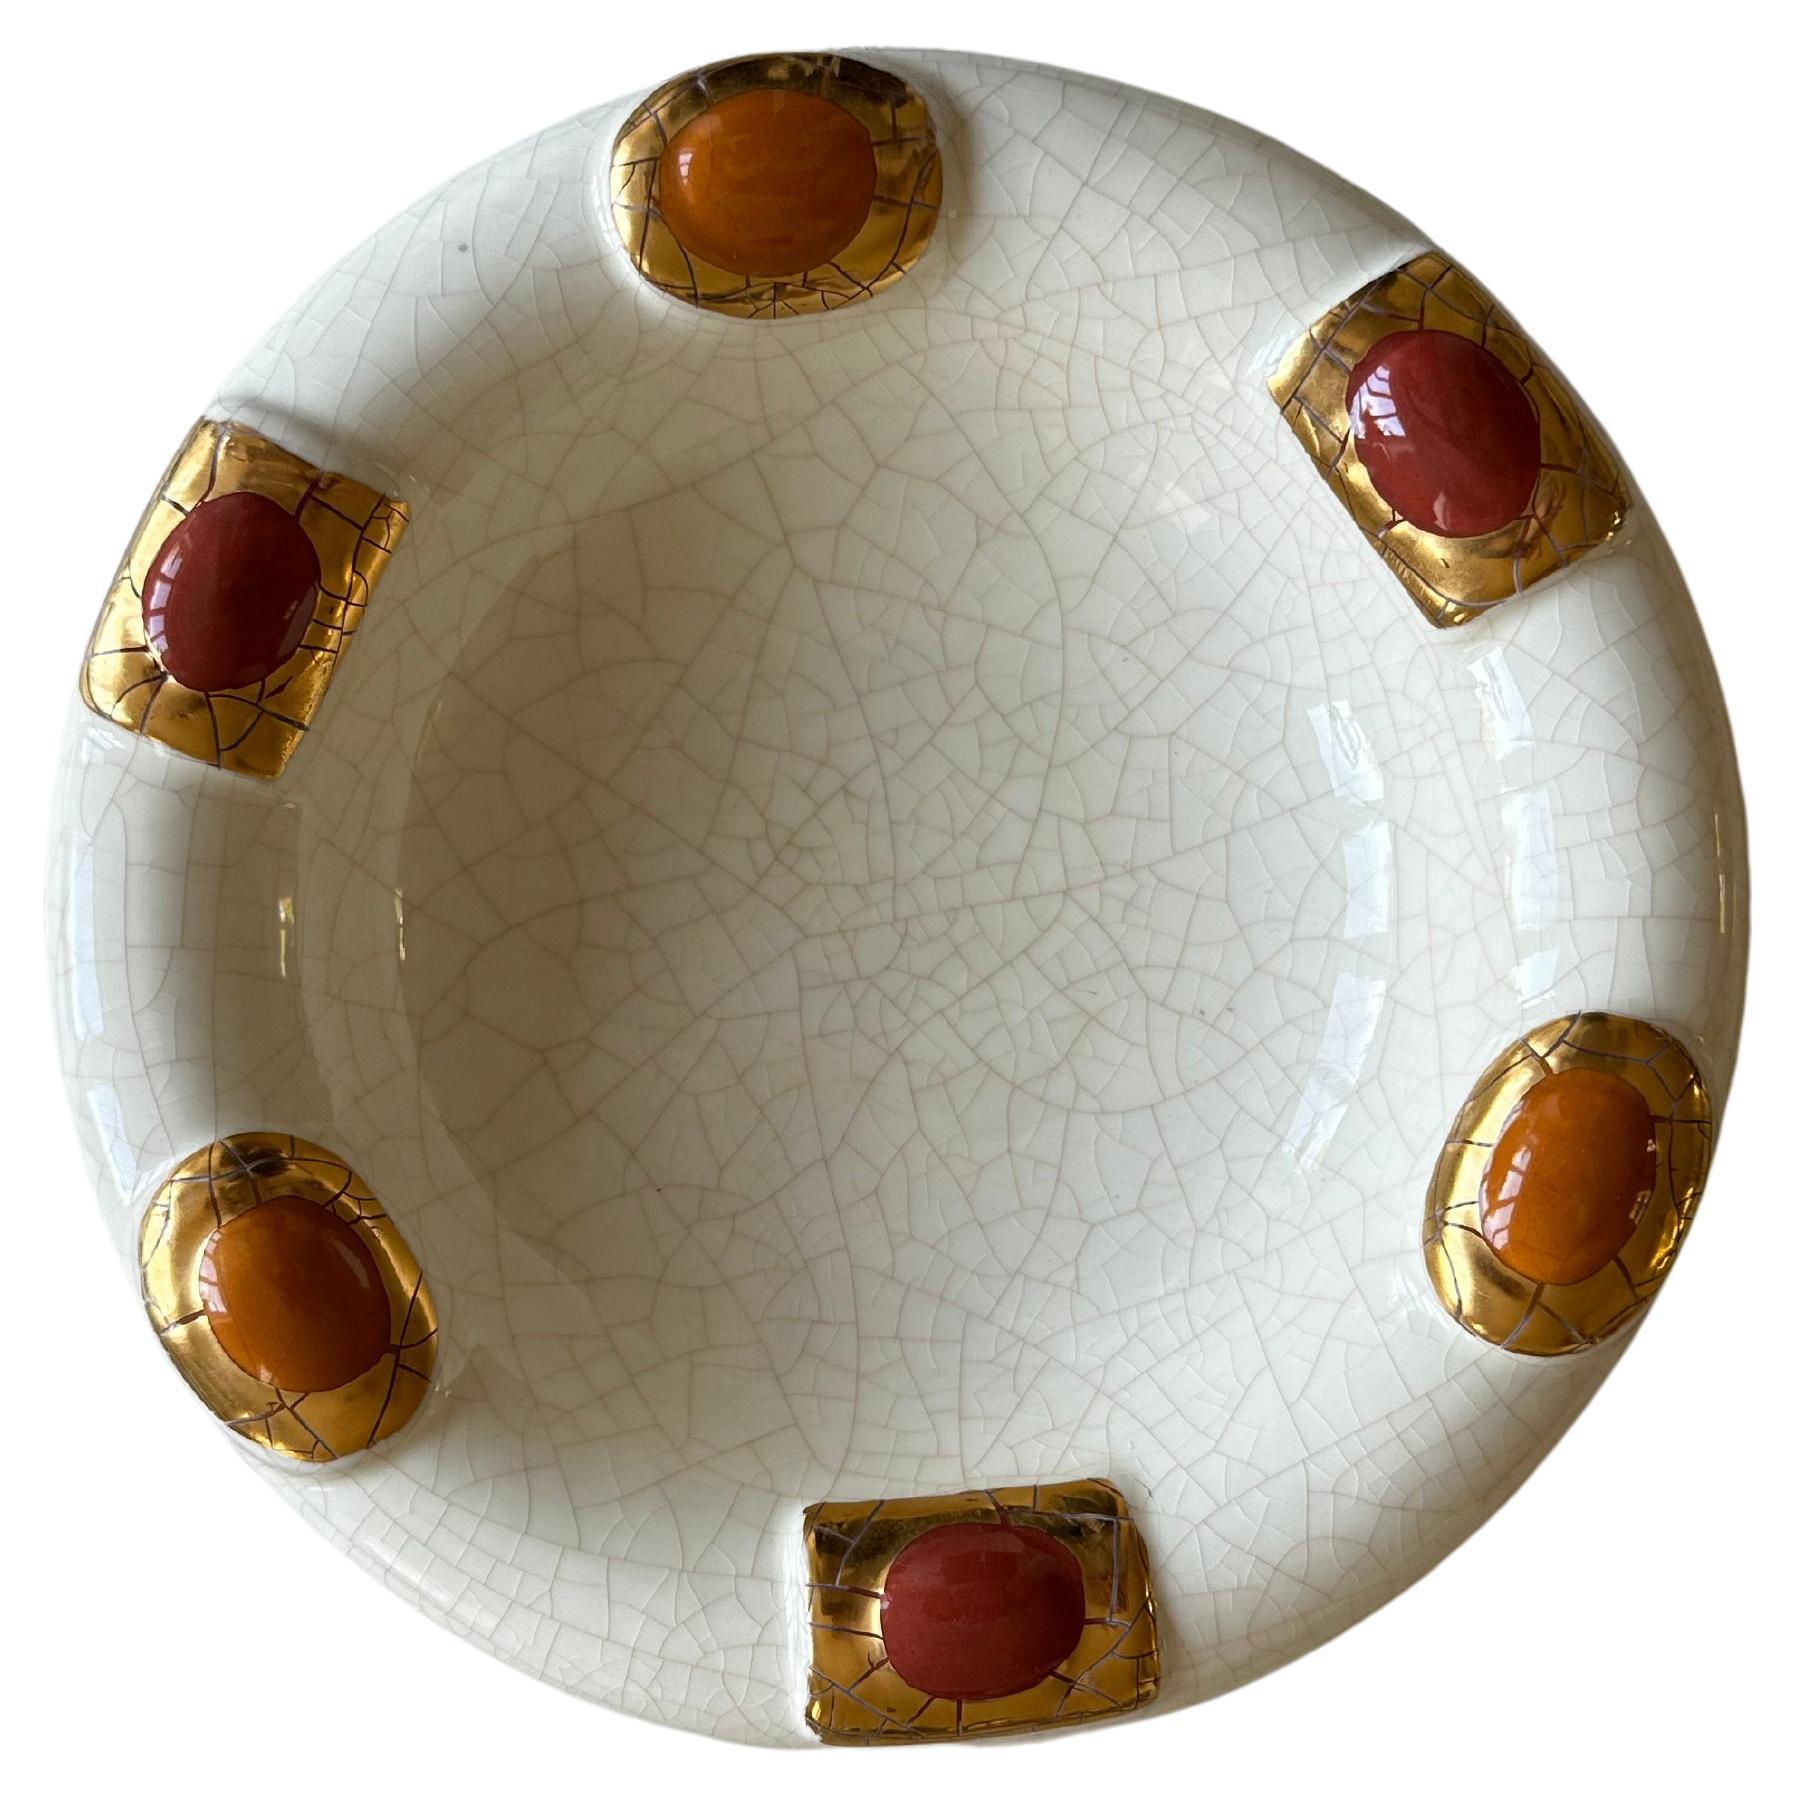 French earthenware crackle glaze dish with enamel decor by Faienceries de Longwy